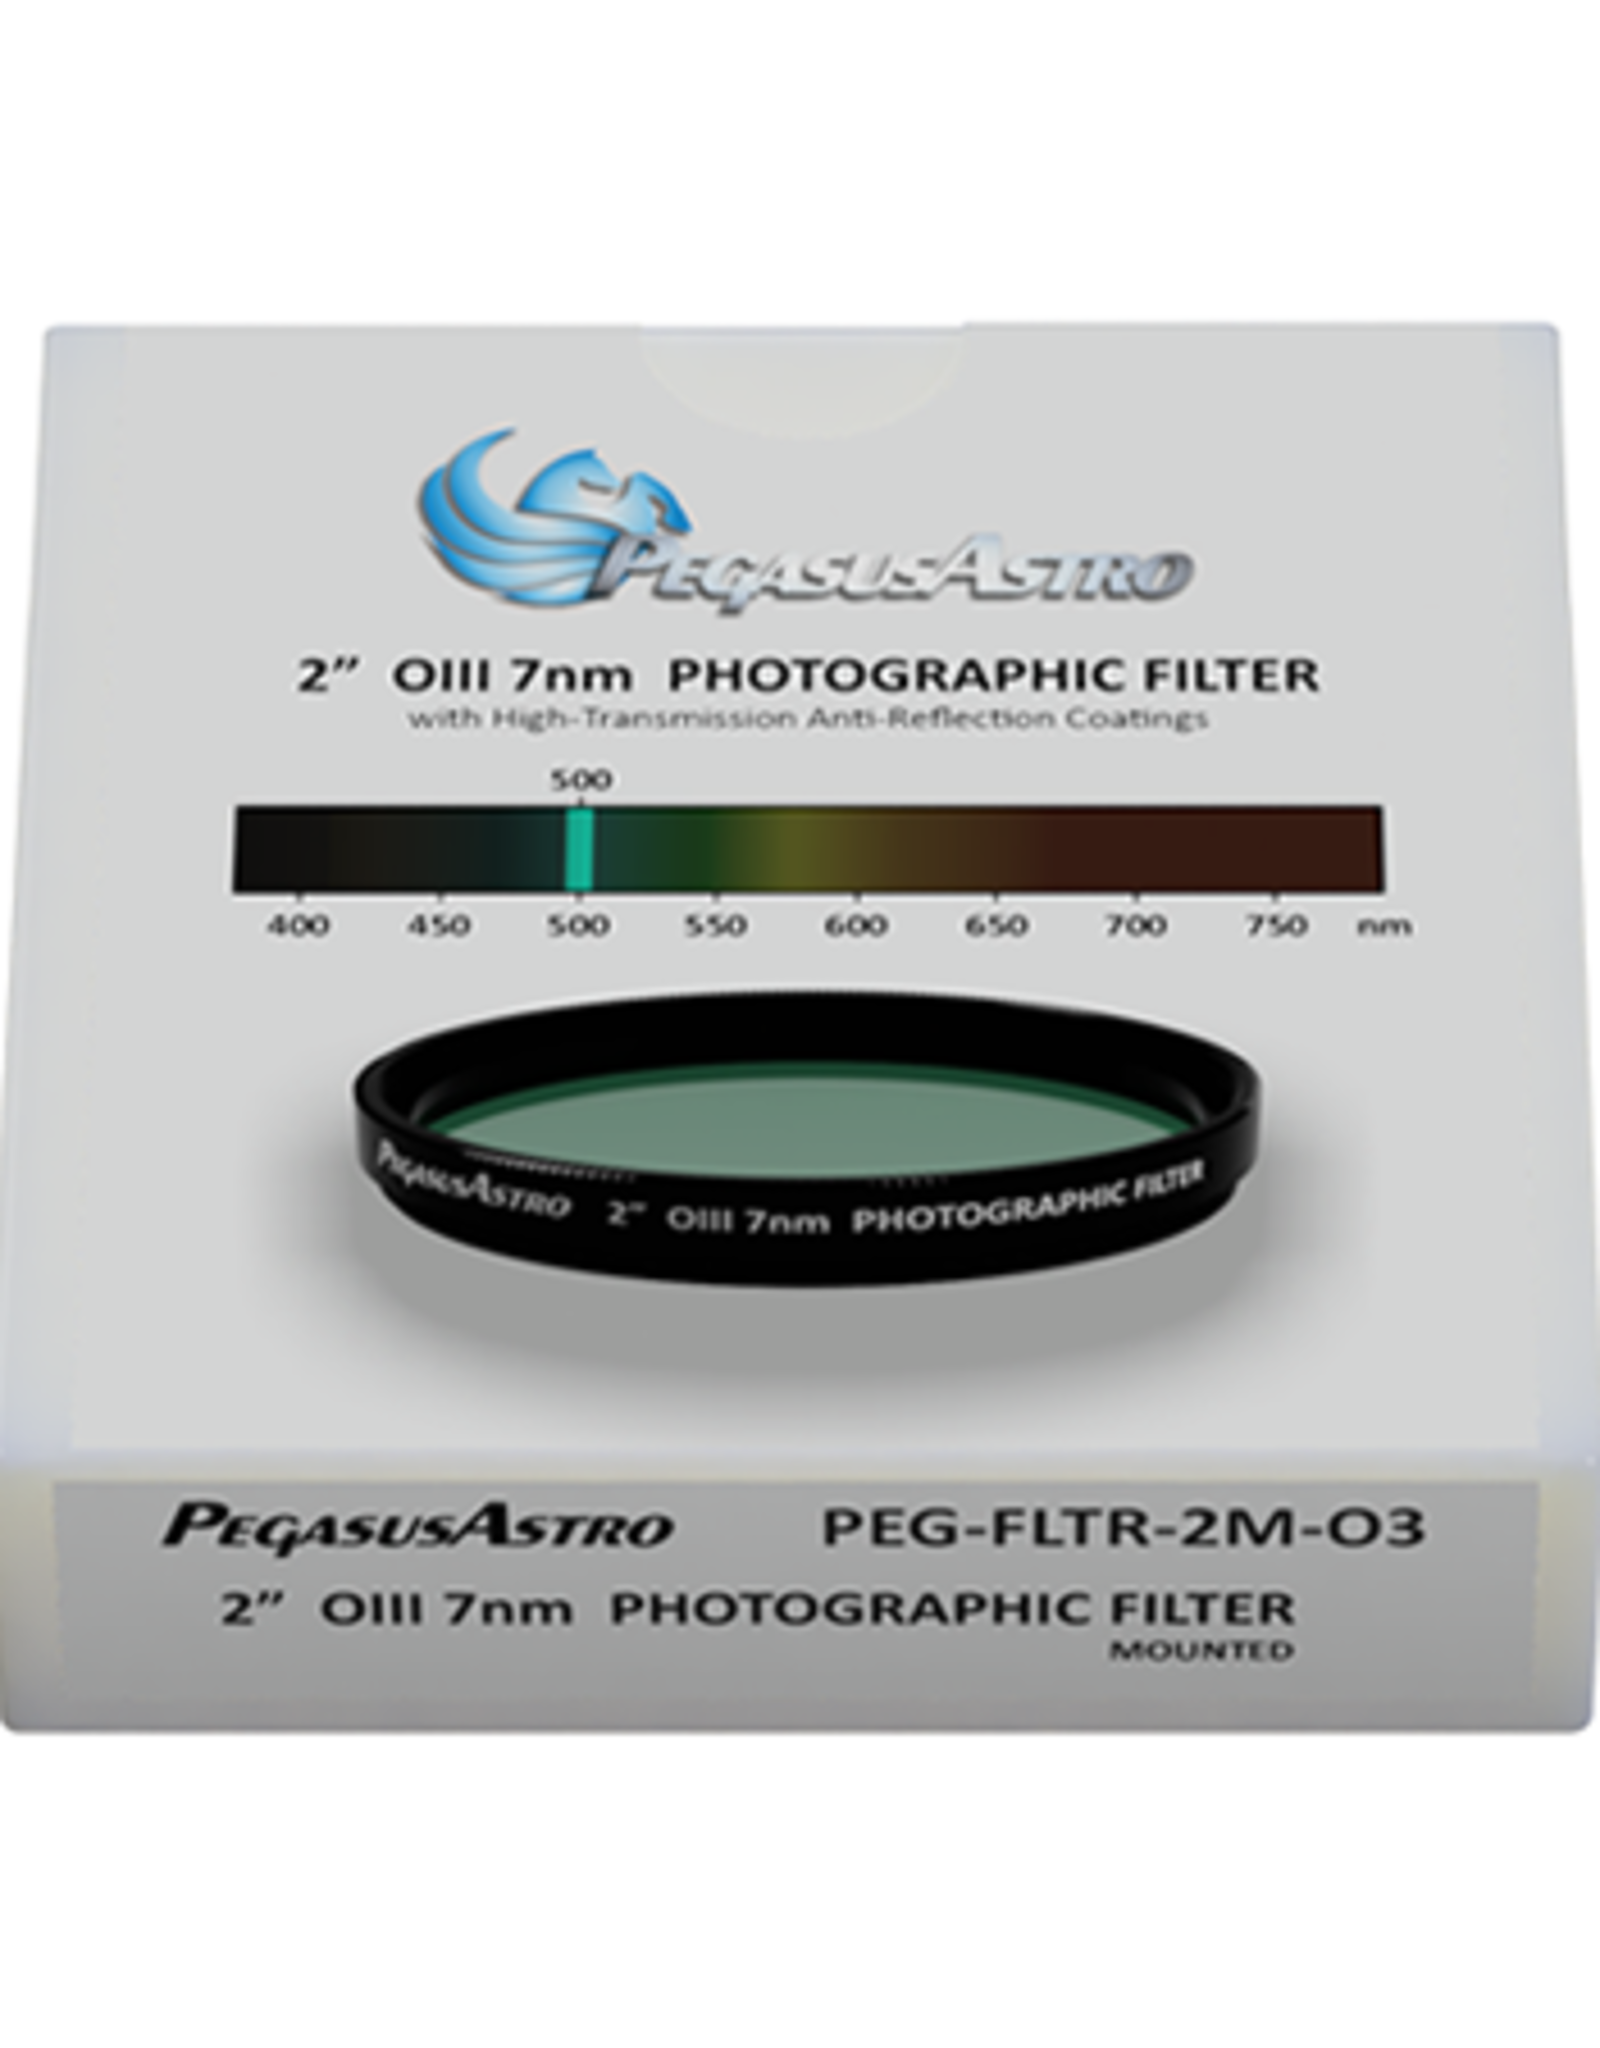 Pegasus Astro Pegasus Astro OIII 2 inch Mounted Photographic Filter (7nm) - PEG-FLTR-2M-O3